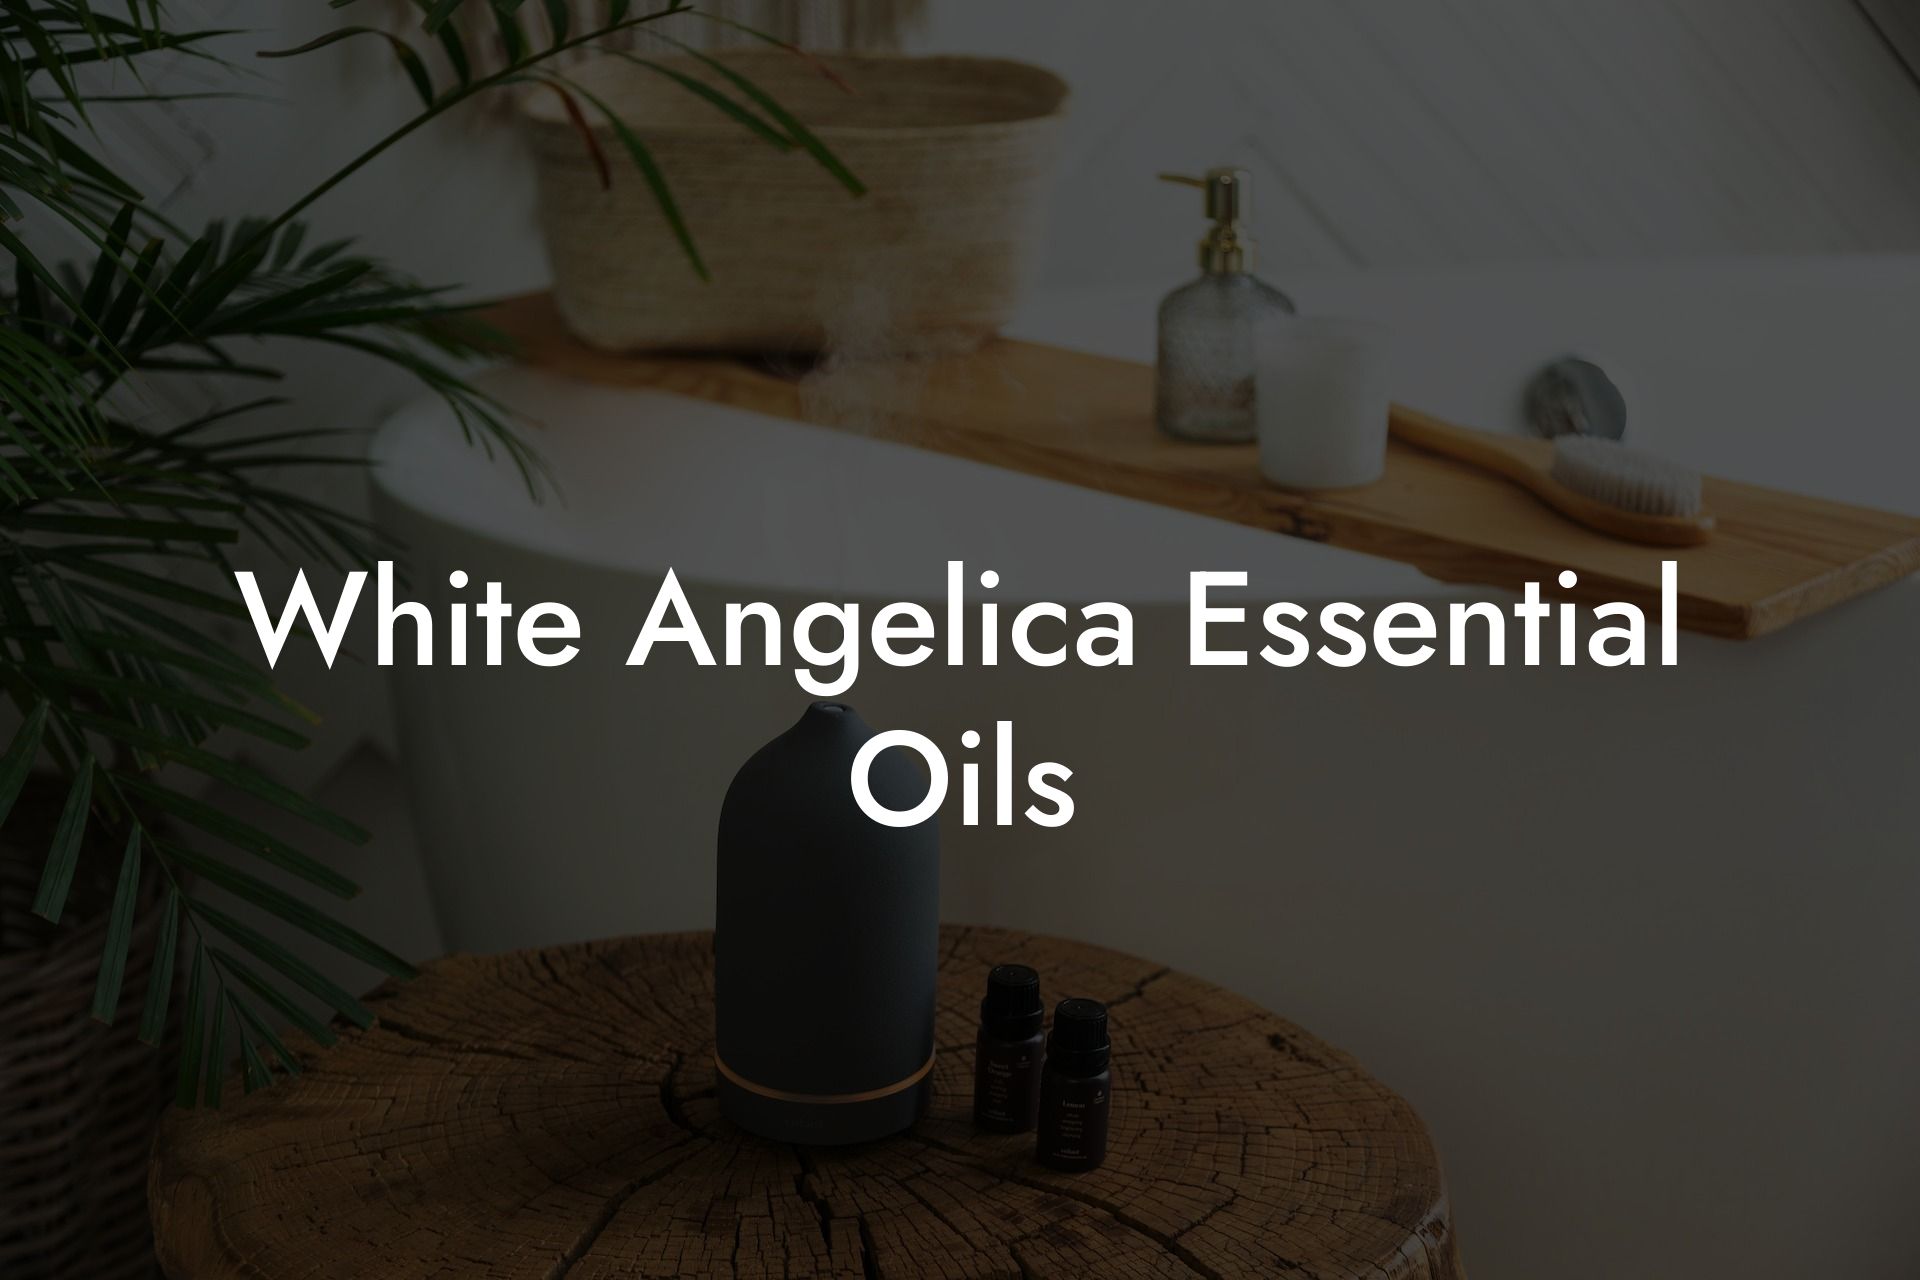 White Angelica Essential Oils